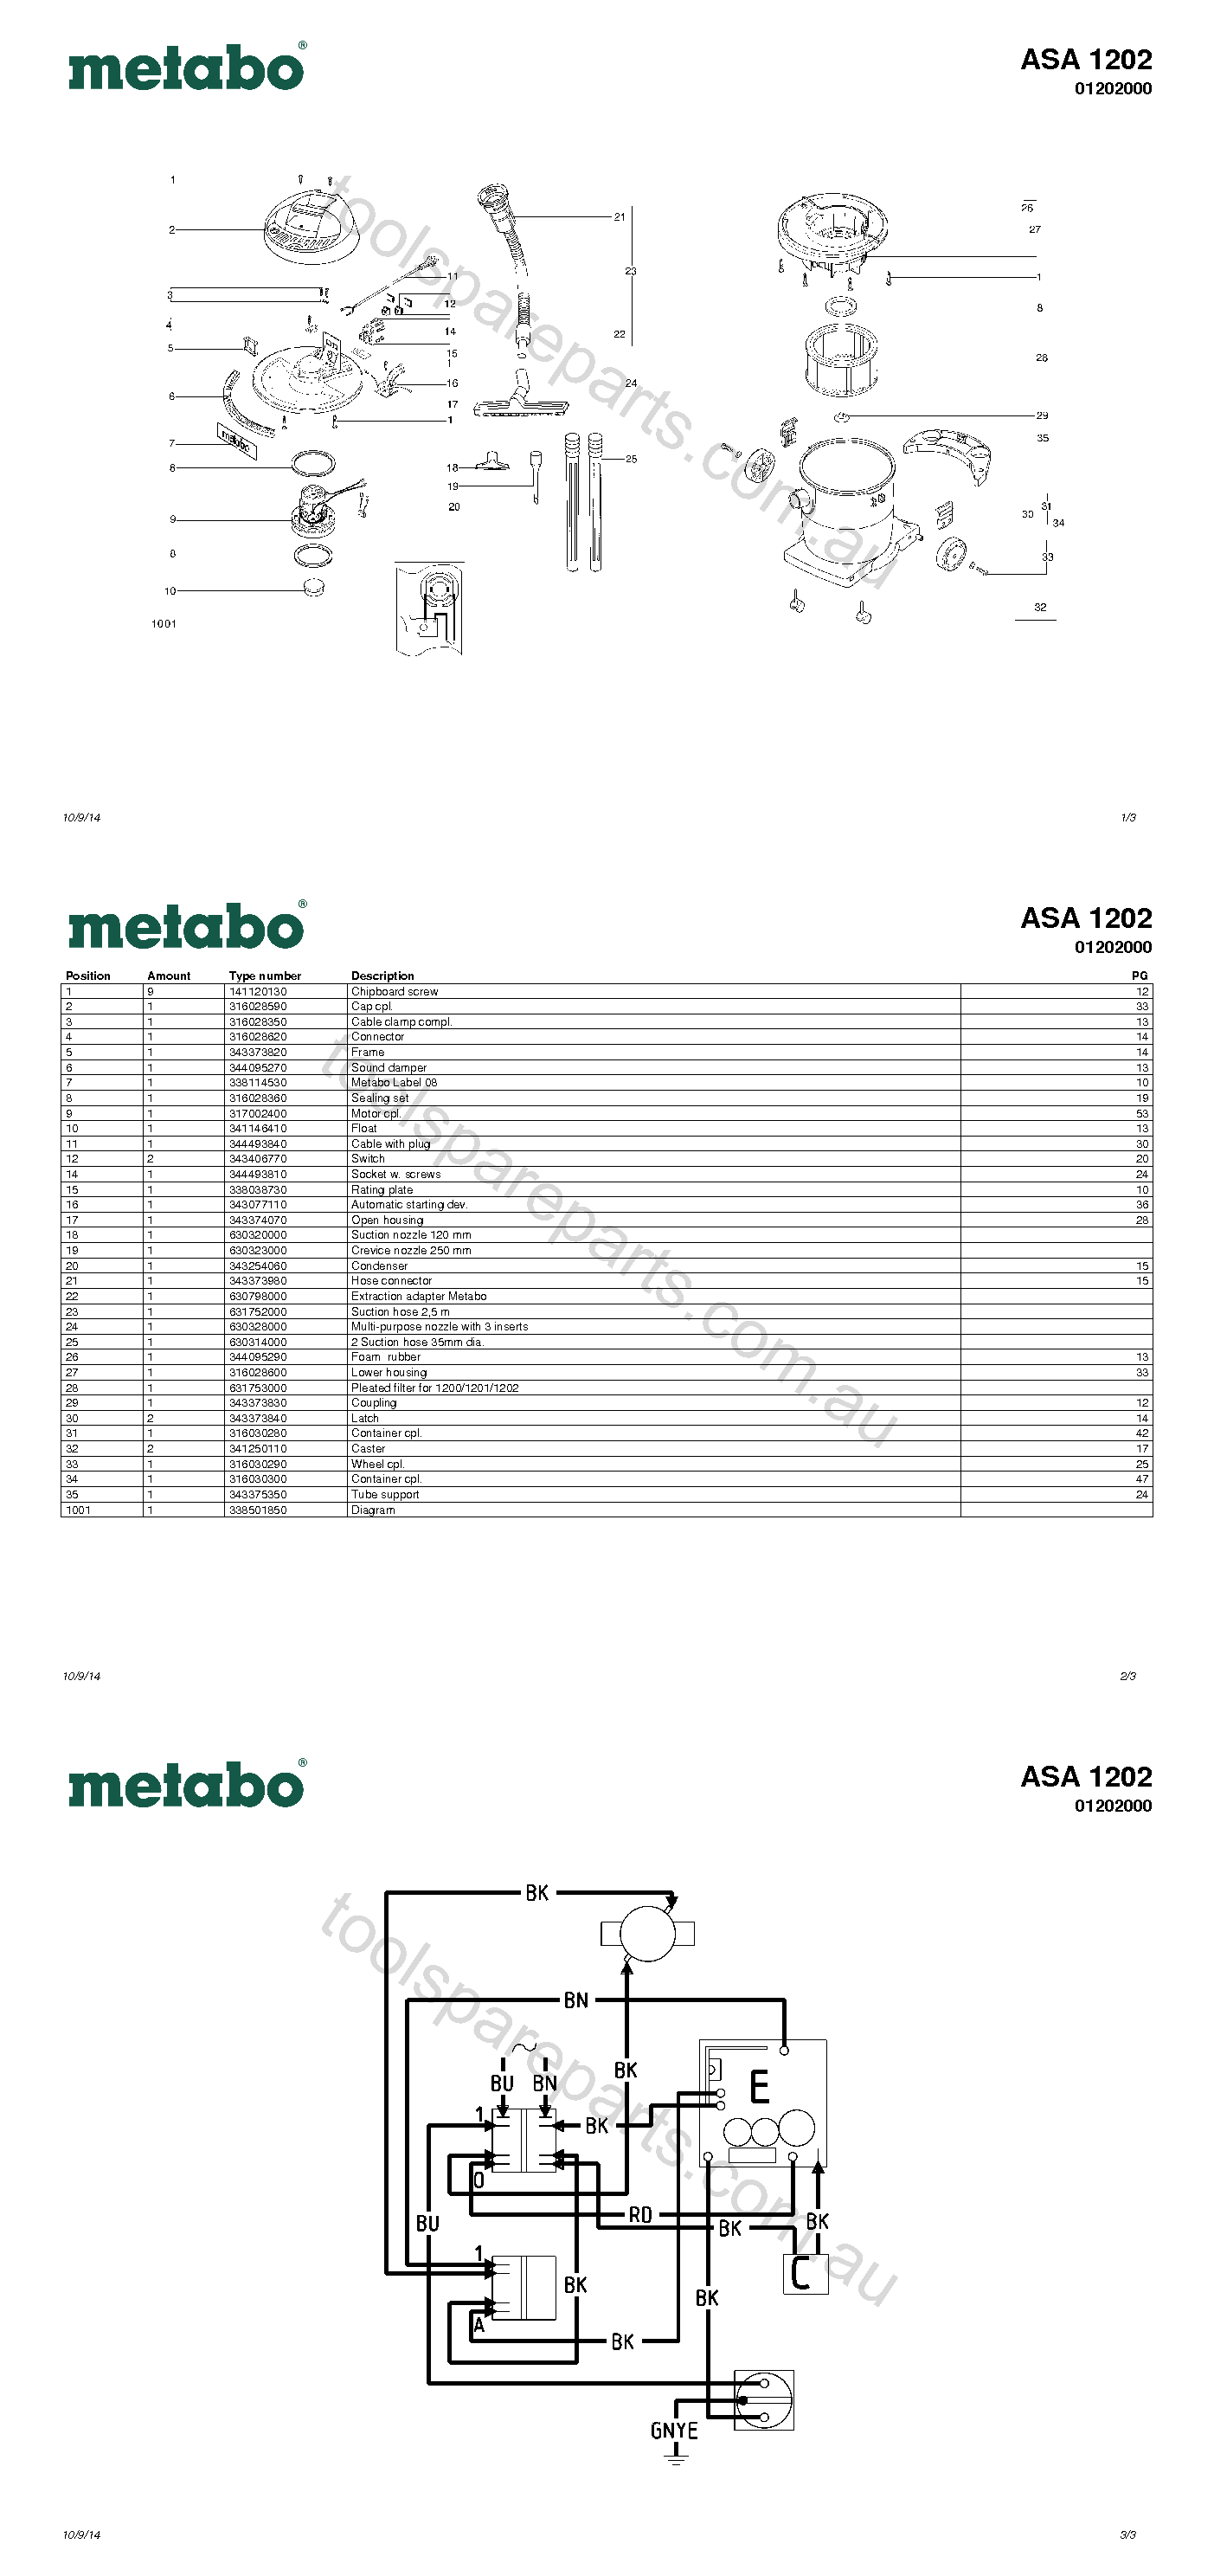 Metabo ASA 1202 01202000  Diagram 1